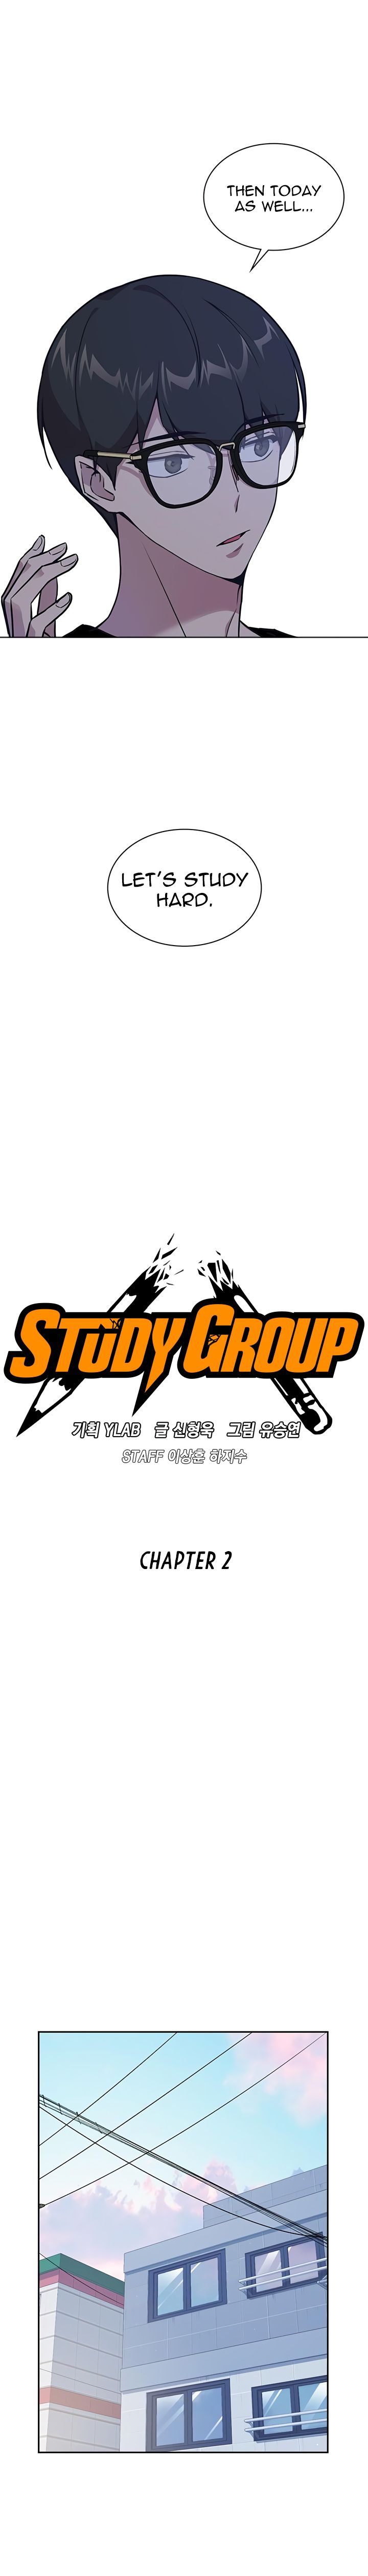 Study Group 2 8